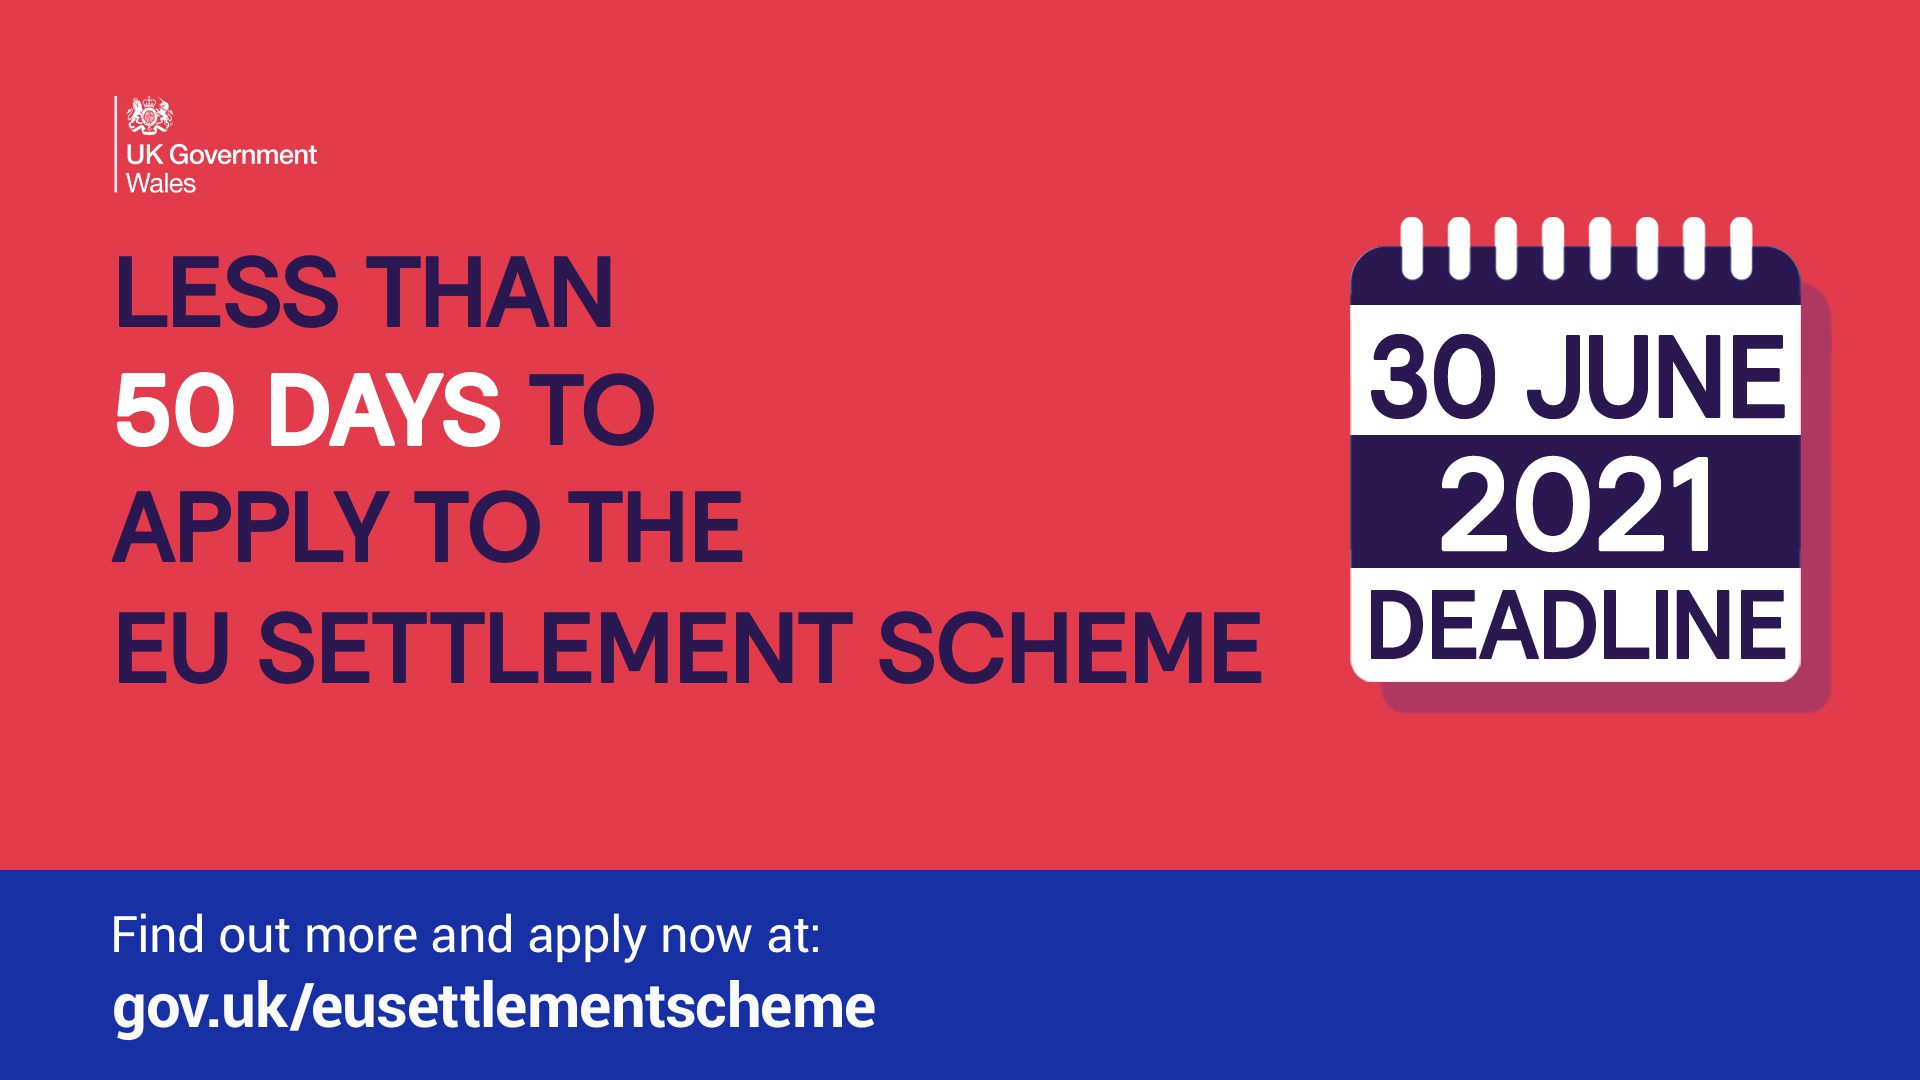 Less than 50 days to apply to EU settlement scheme